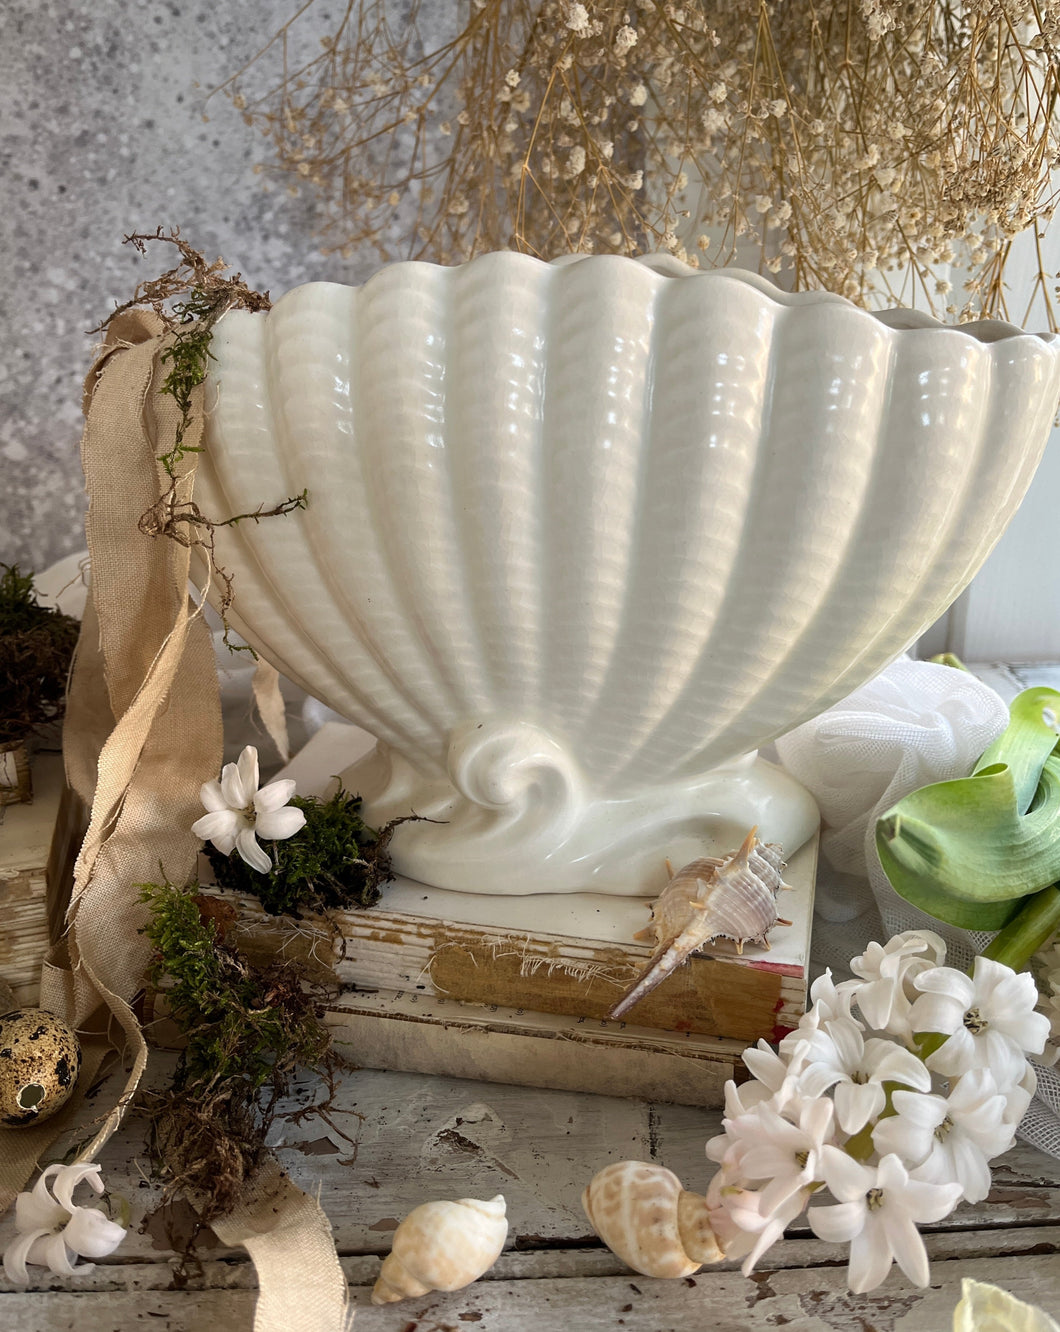 Sylvac shell design mantle vase